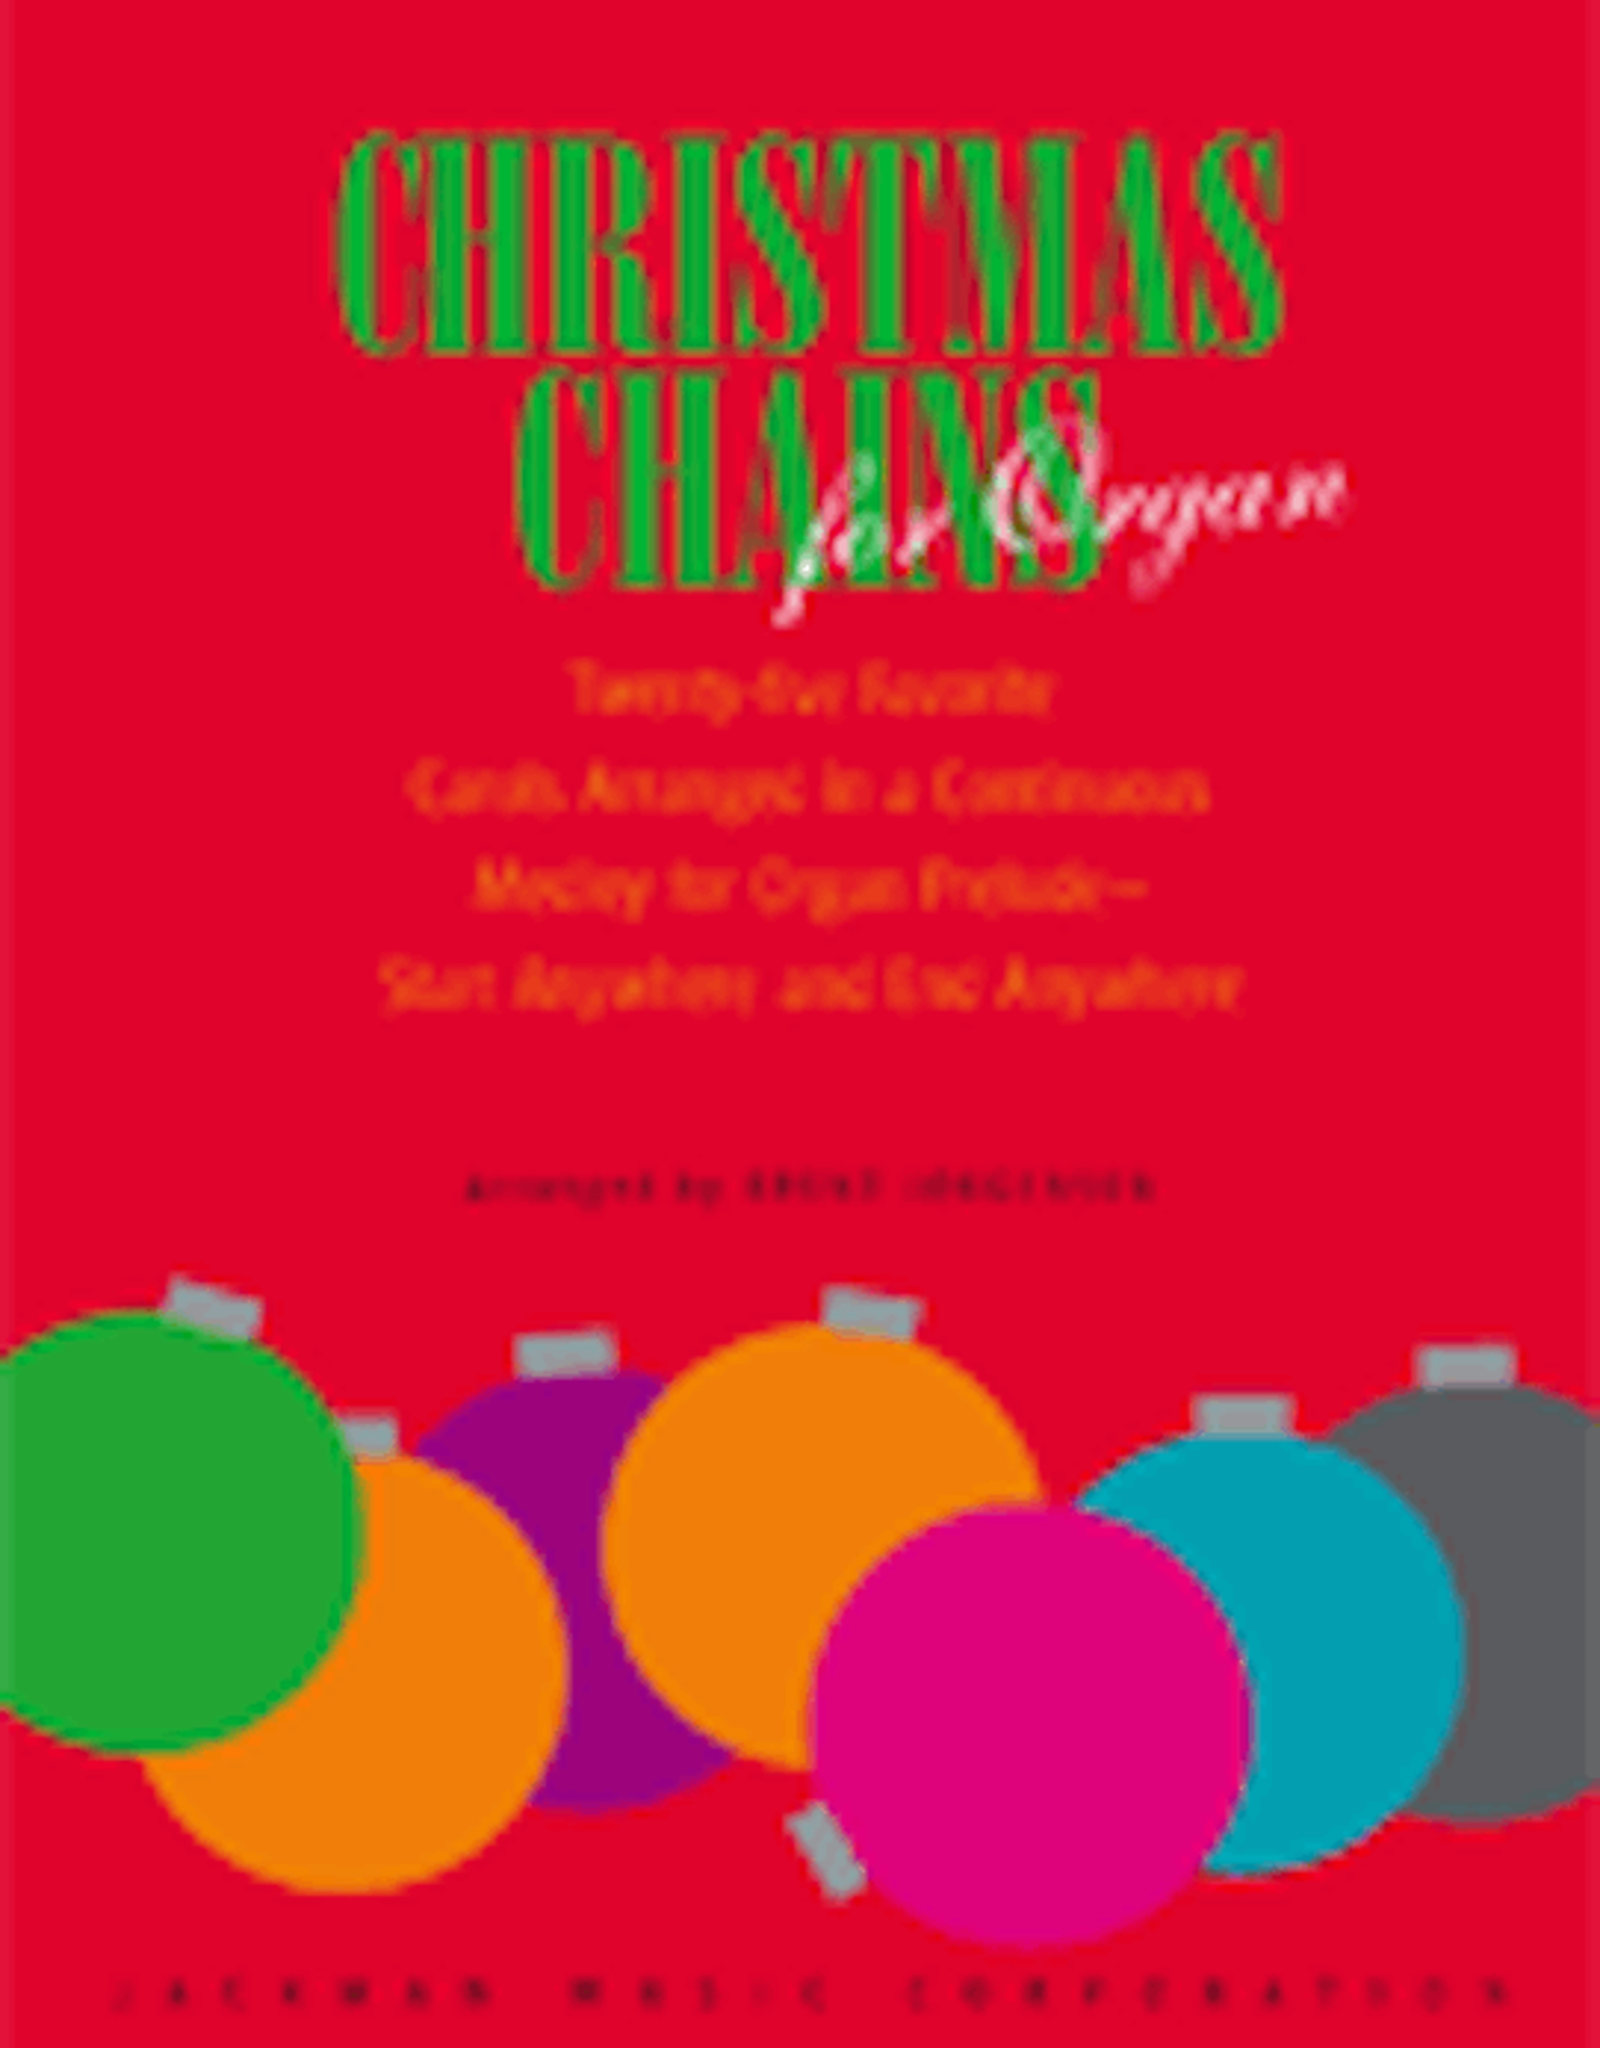 Jackman Music Christmas Chains for Organ arr. Brent Jorgensen